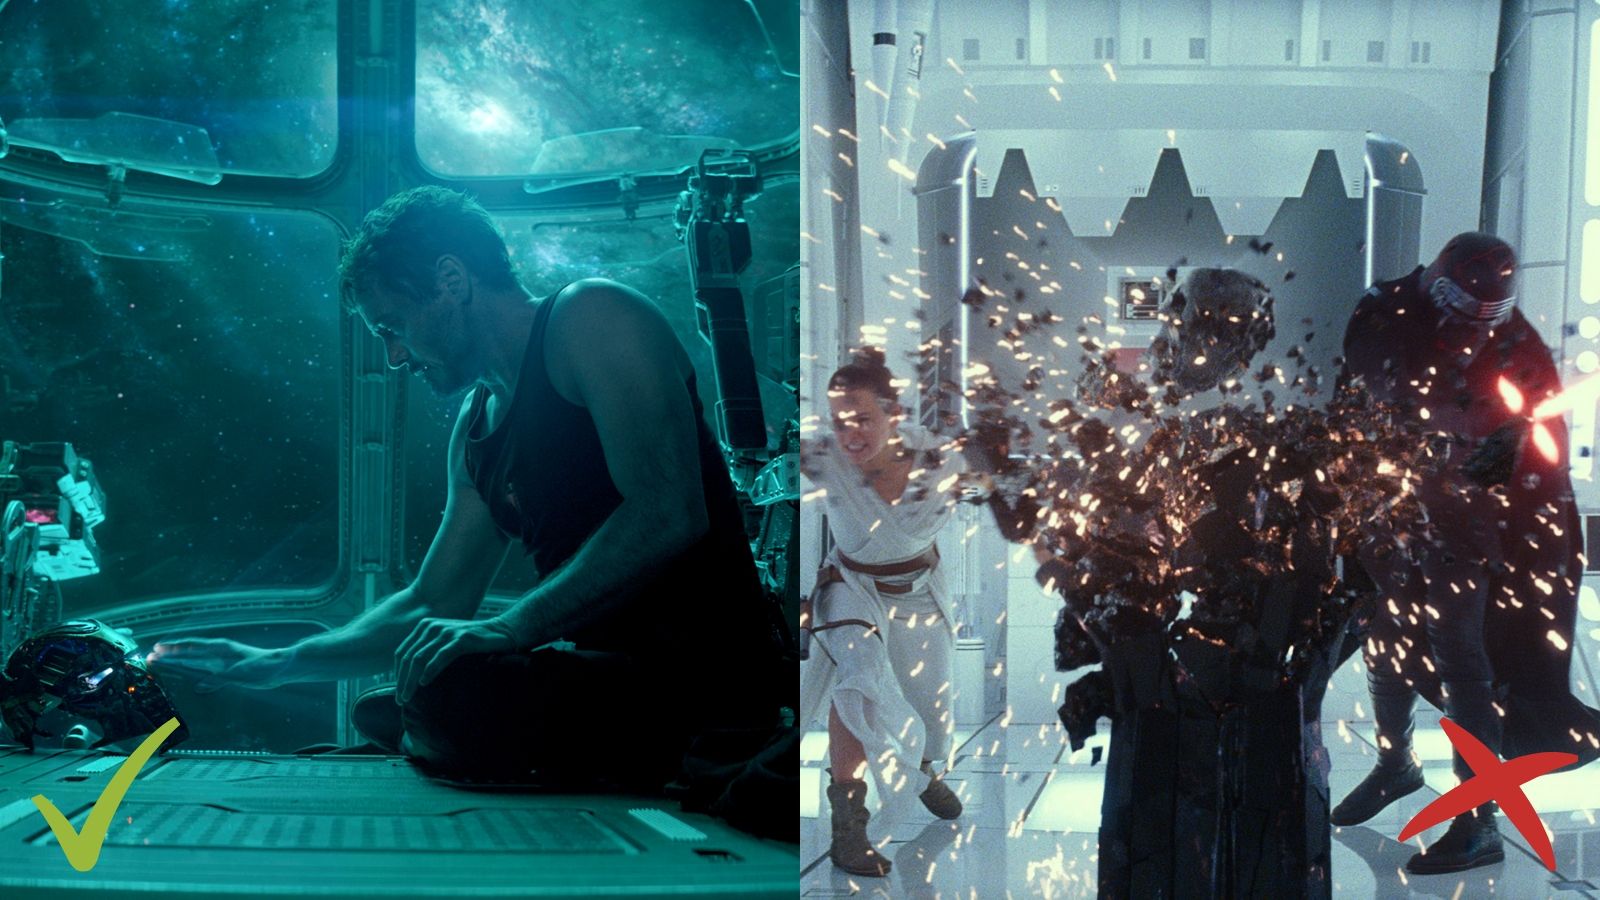 Avengers: Endgame, Star Wars: The Rise of Skywalker, Atriebēji: Noslēgums, Zvaigžņu kari: Skaivokera atdzimšana